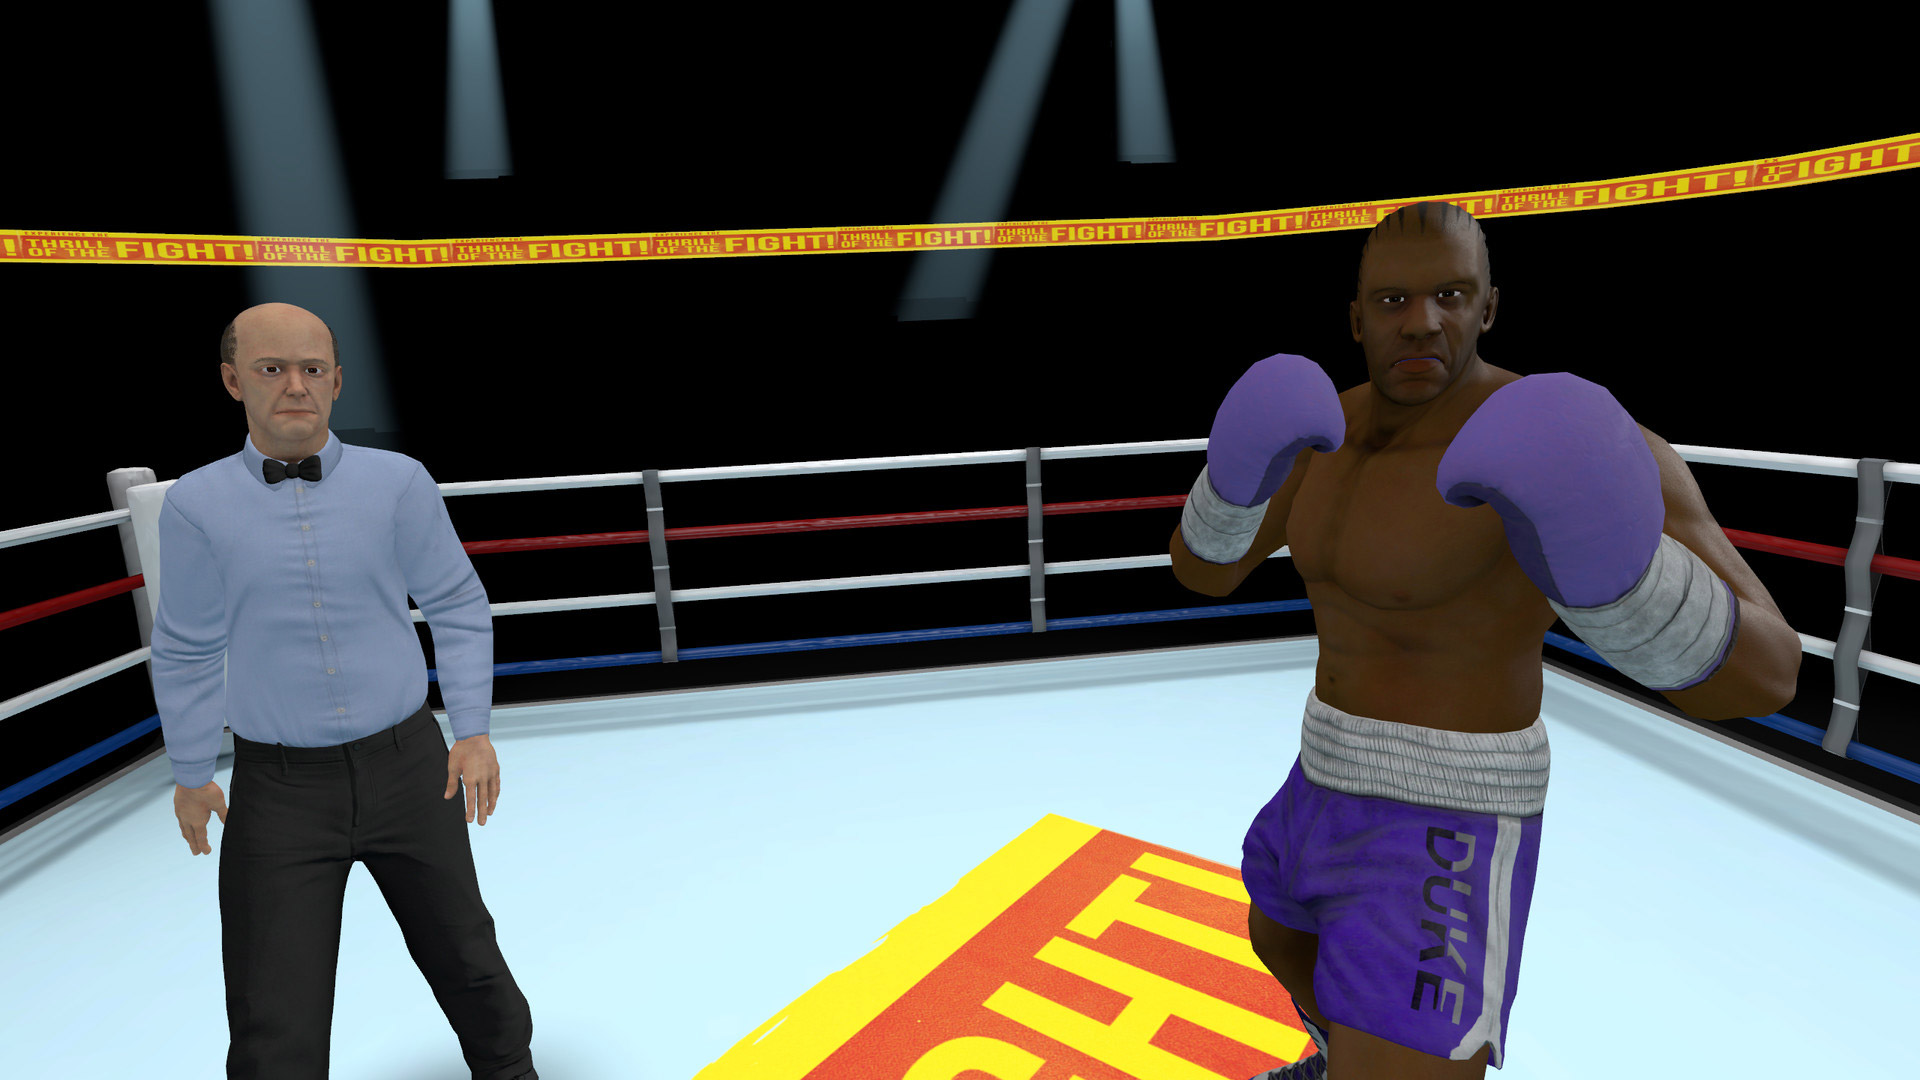 Captura de pantalla del juego Thrill of the Fight.